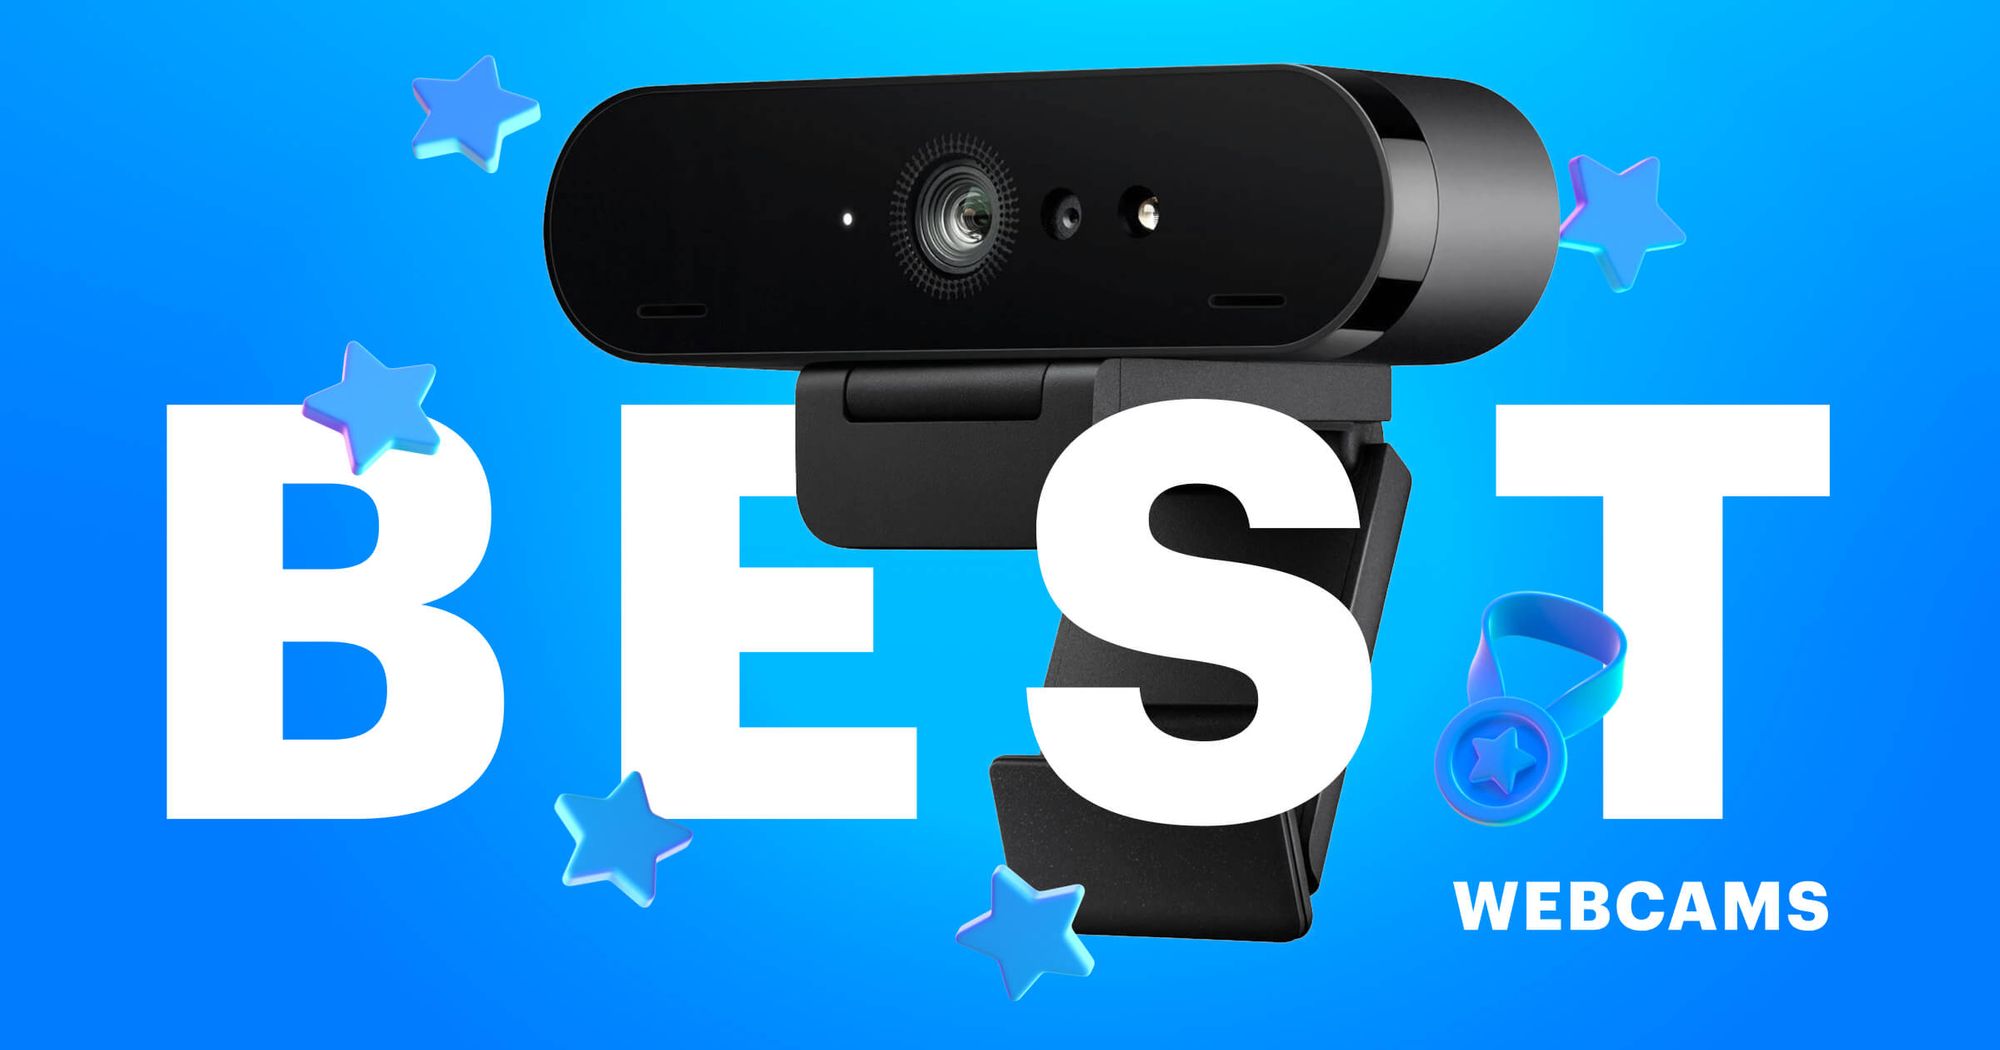 8 best webcams for 2021